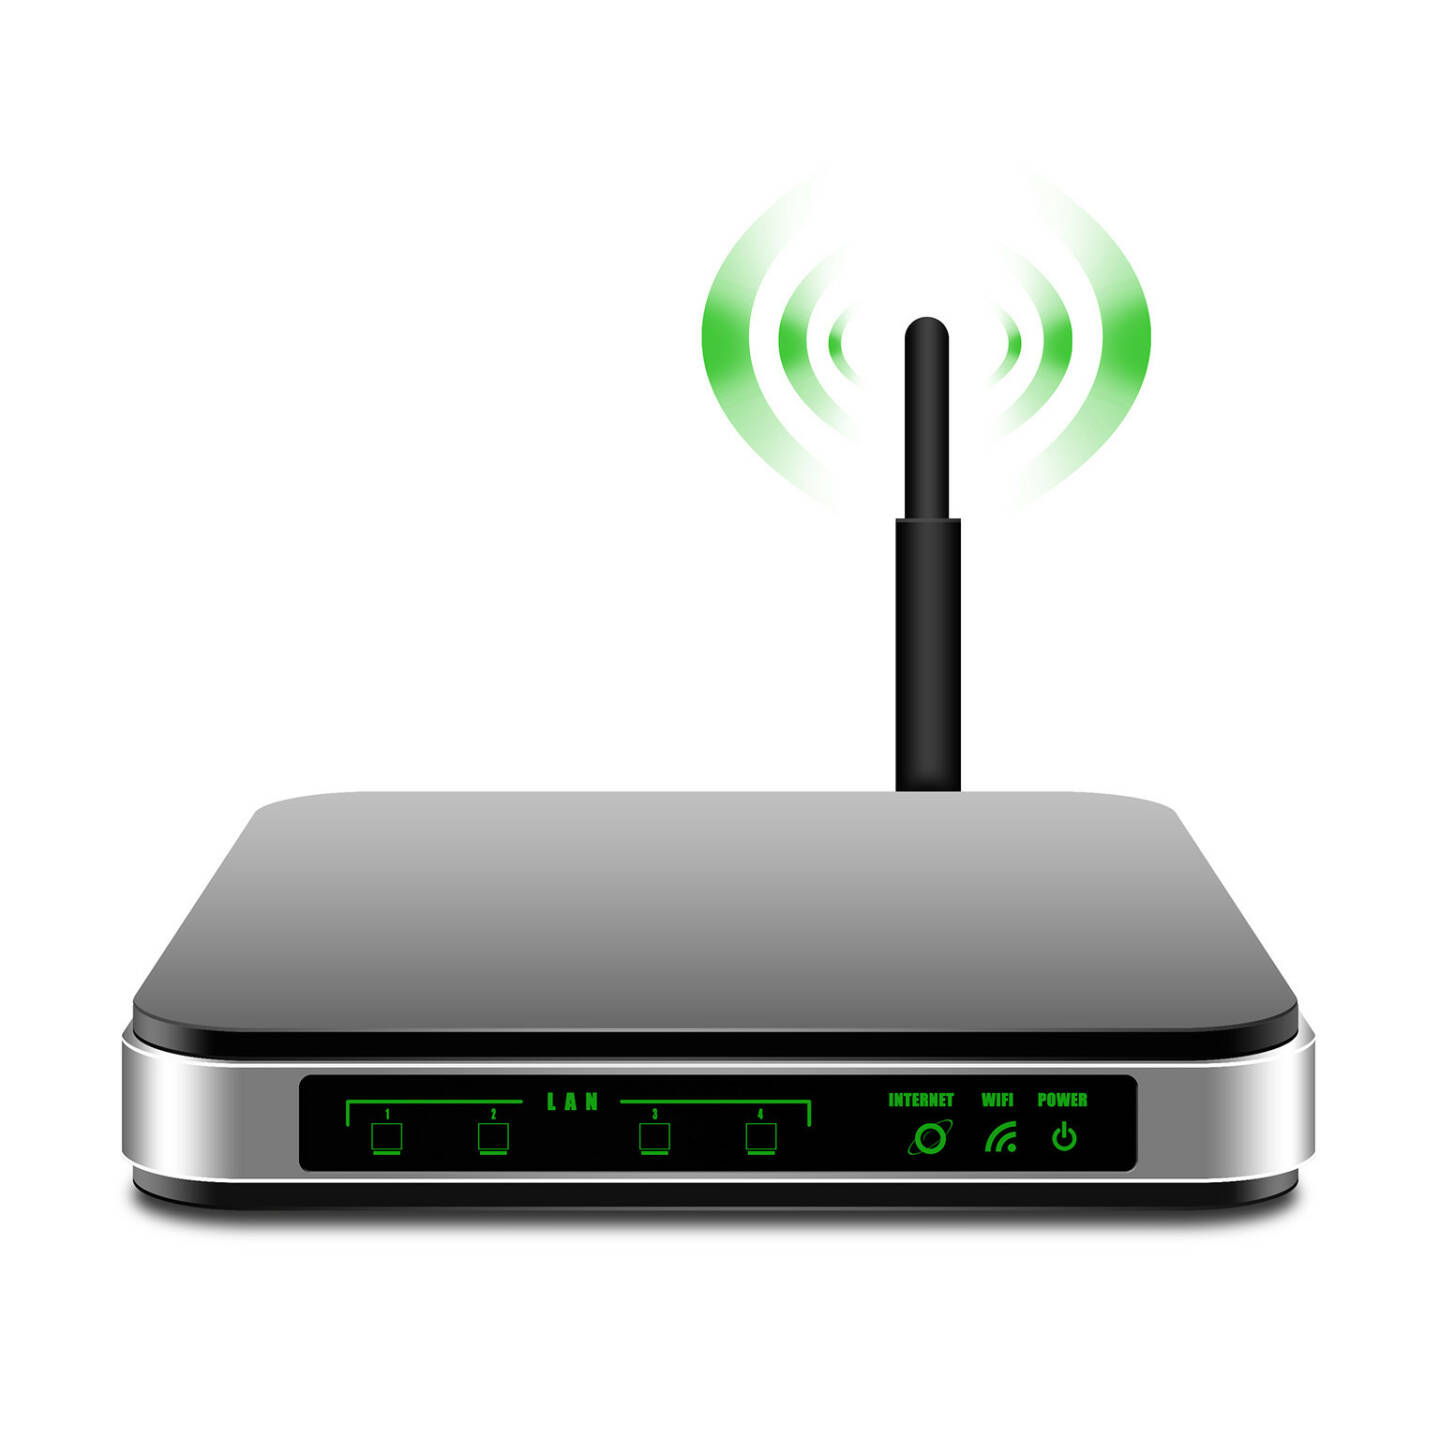 WLAN Router, Antenne, WIFI, Internet, Netzwerk http://www.shutterstock.com/de/pic-168956426/stock-photo--wireless-router-with-the-antenna-illustration.html